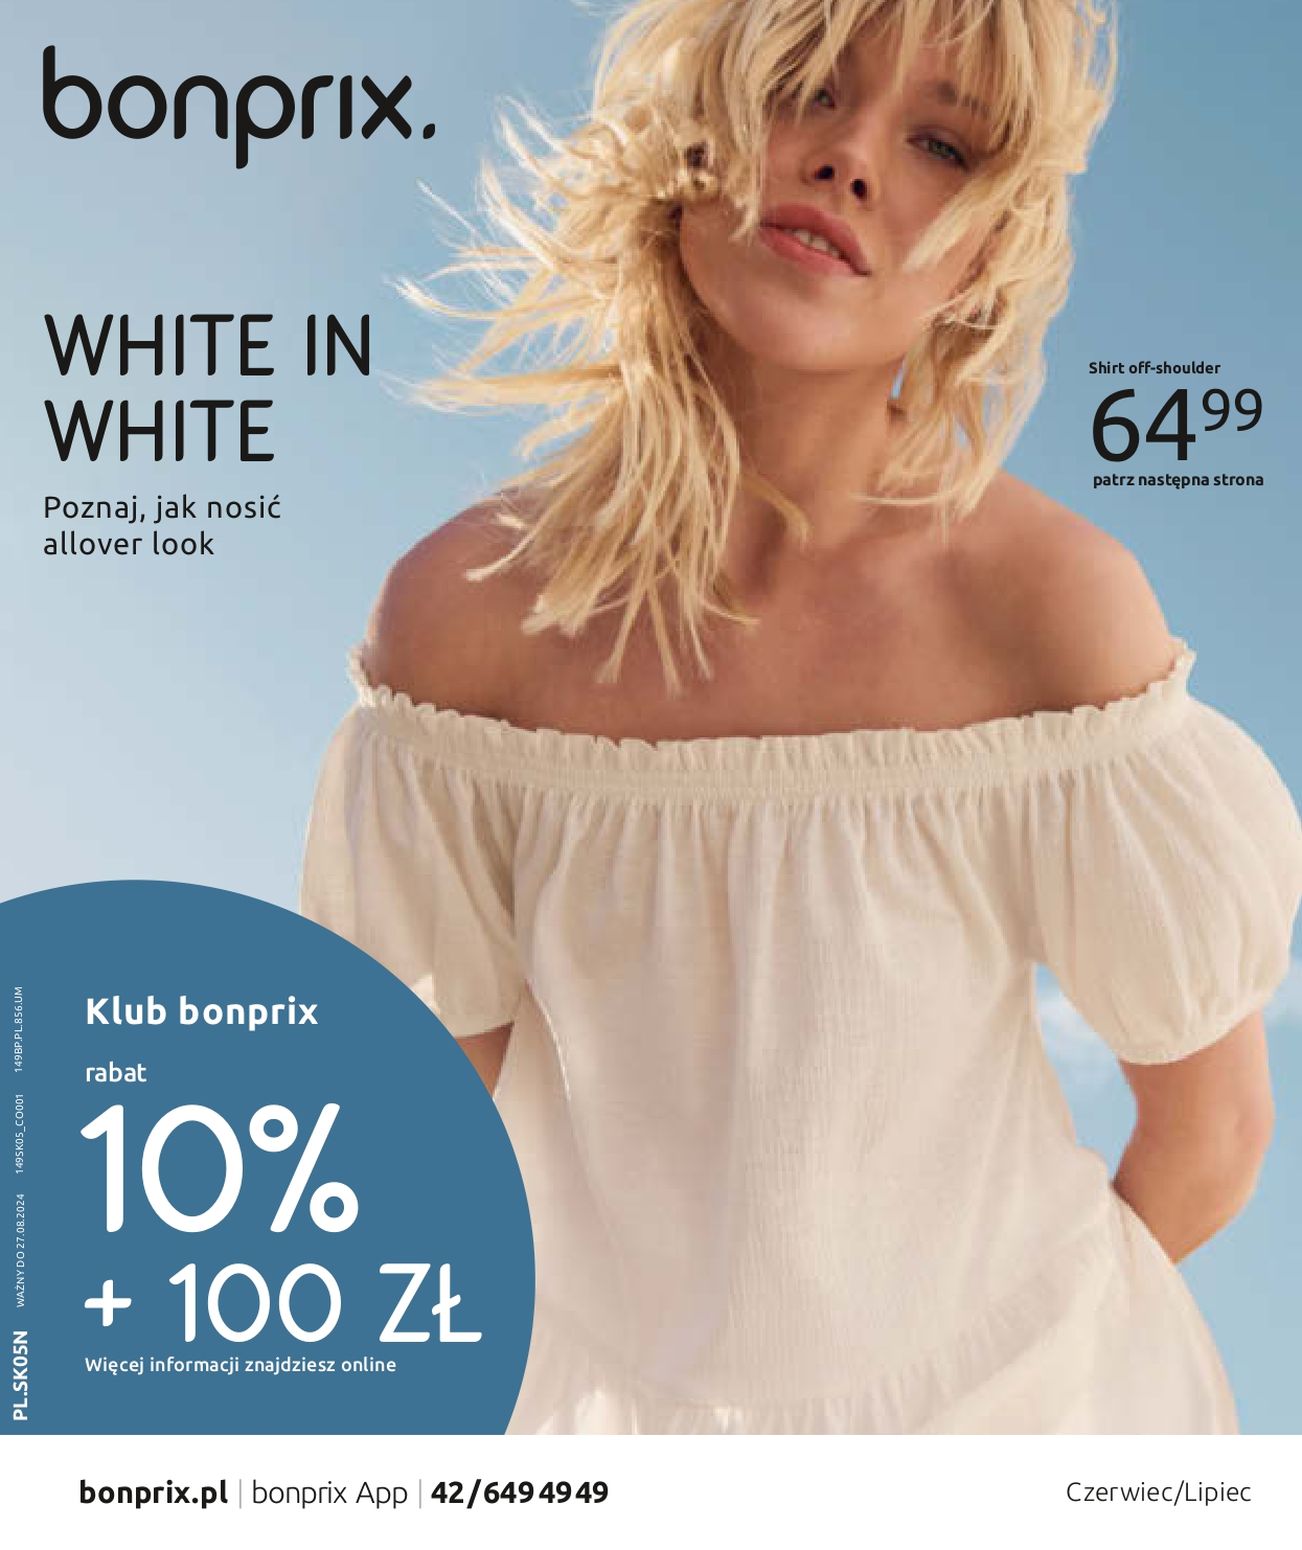 gazetka promocyjna bonprix WHITE IN WHITE - Strona 1